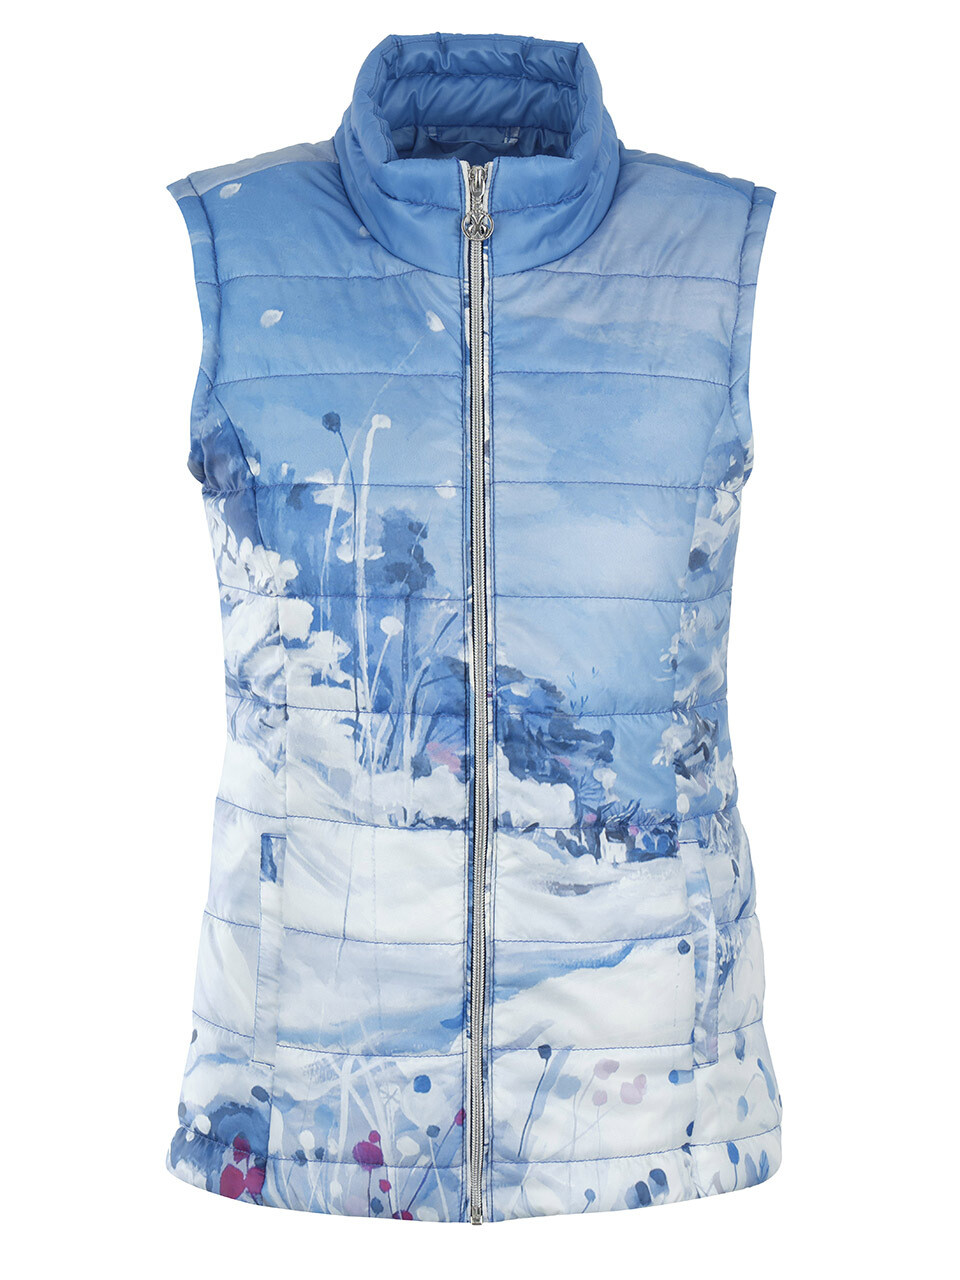 Simply Art Dolcezza: Snowfall Abstract Art Pocket Zip Vest